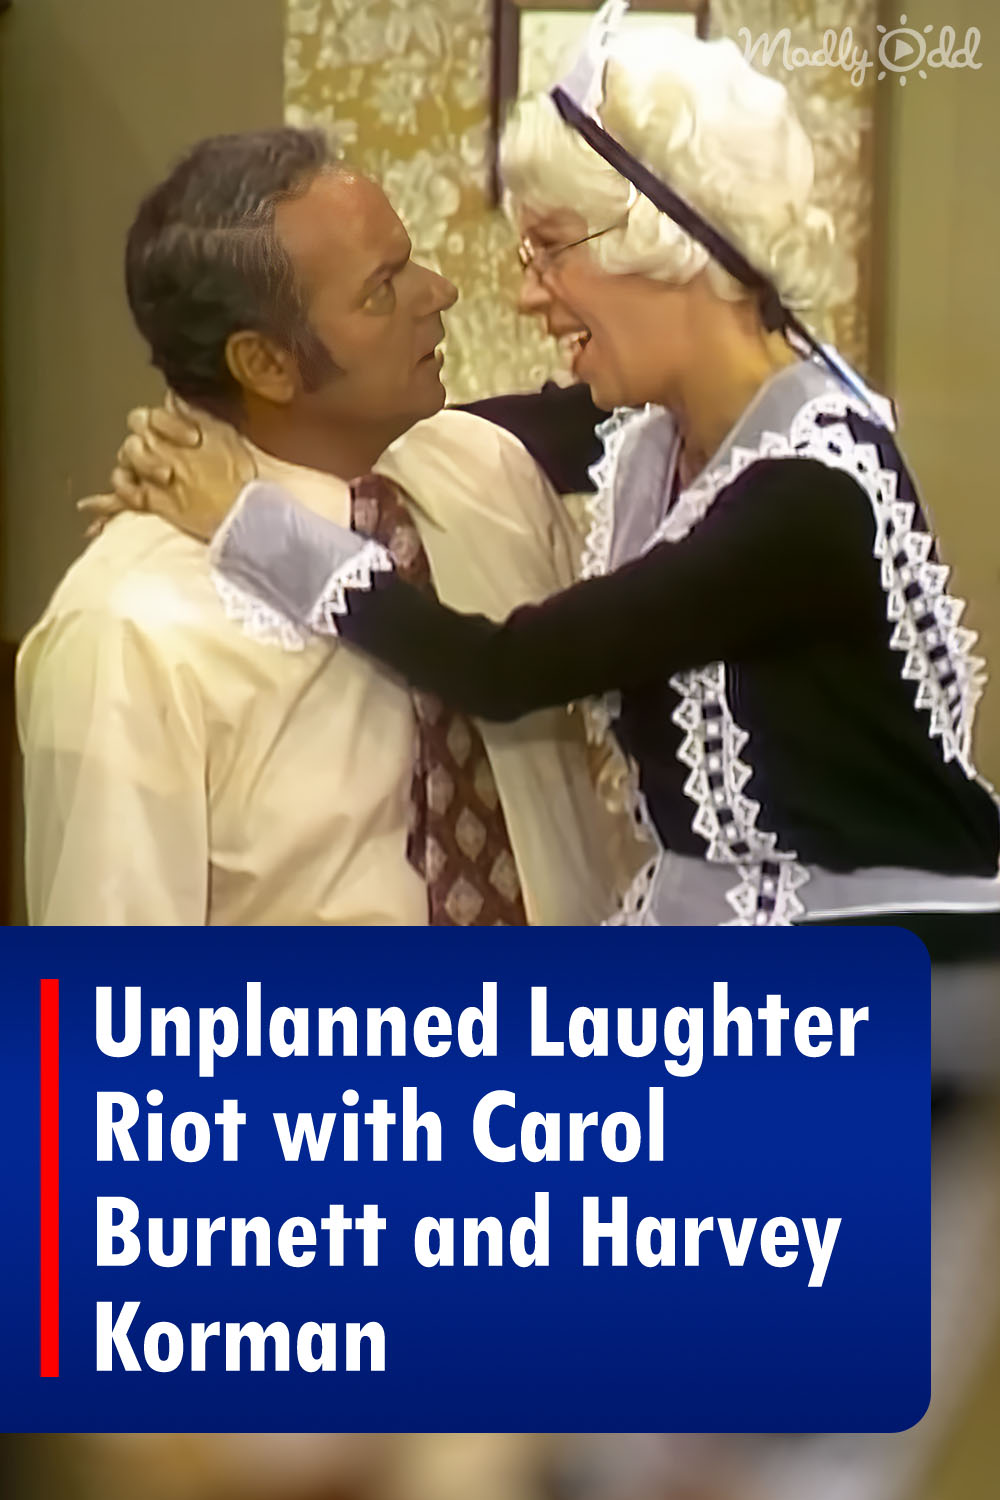 Unplanned Laughter Riot with Carol Burnett and Harvey Korman